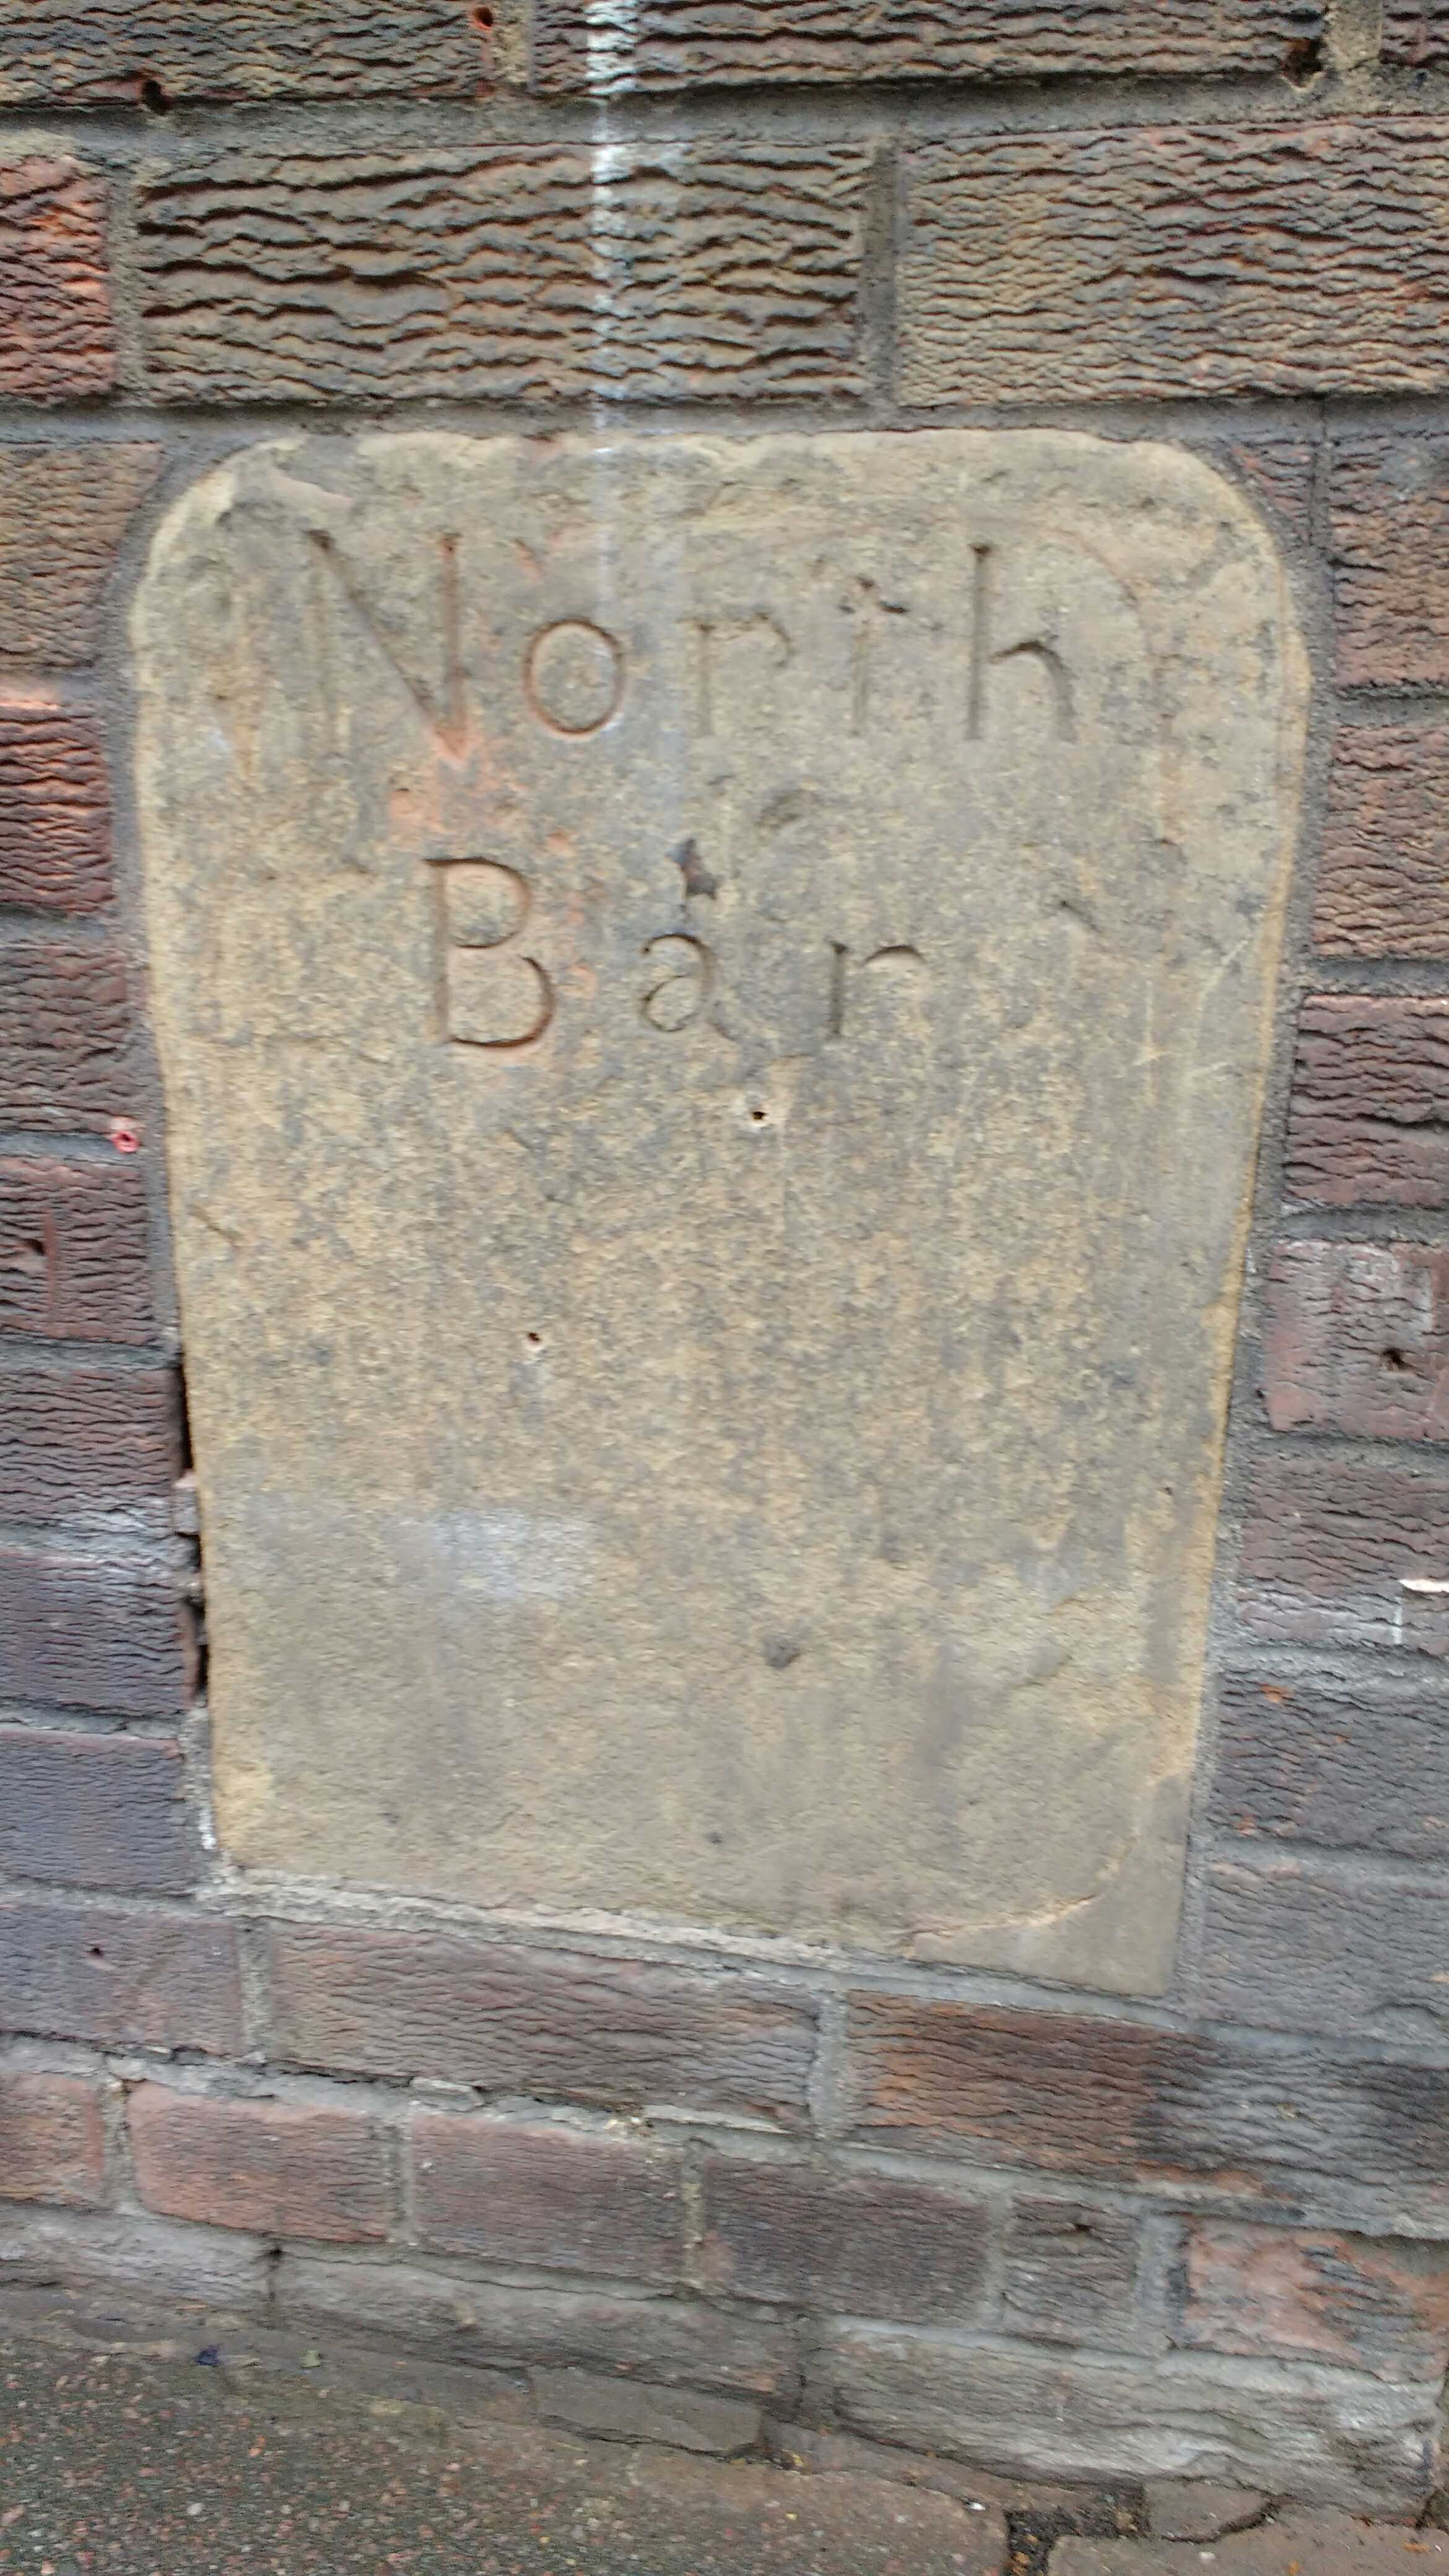 North Bar stone.